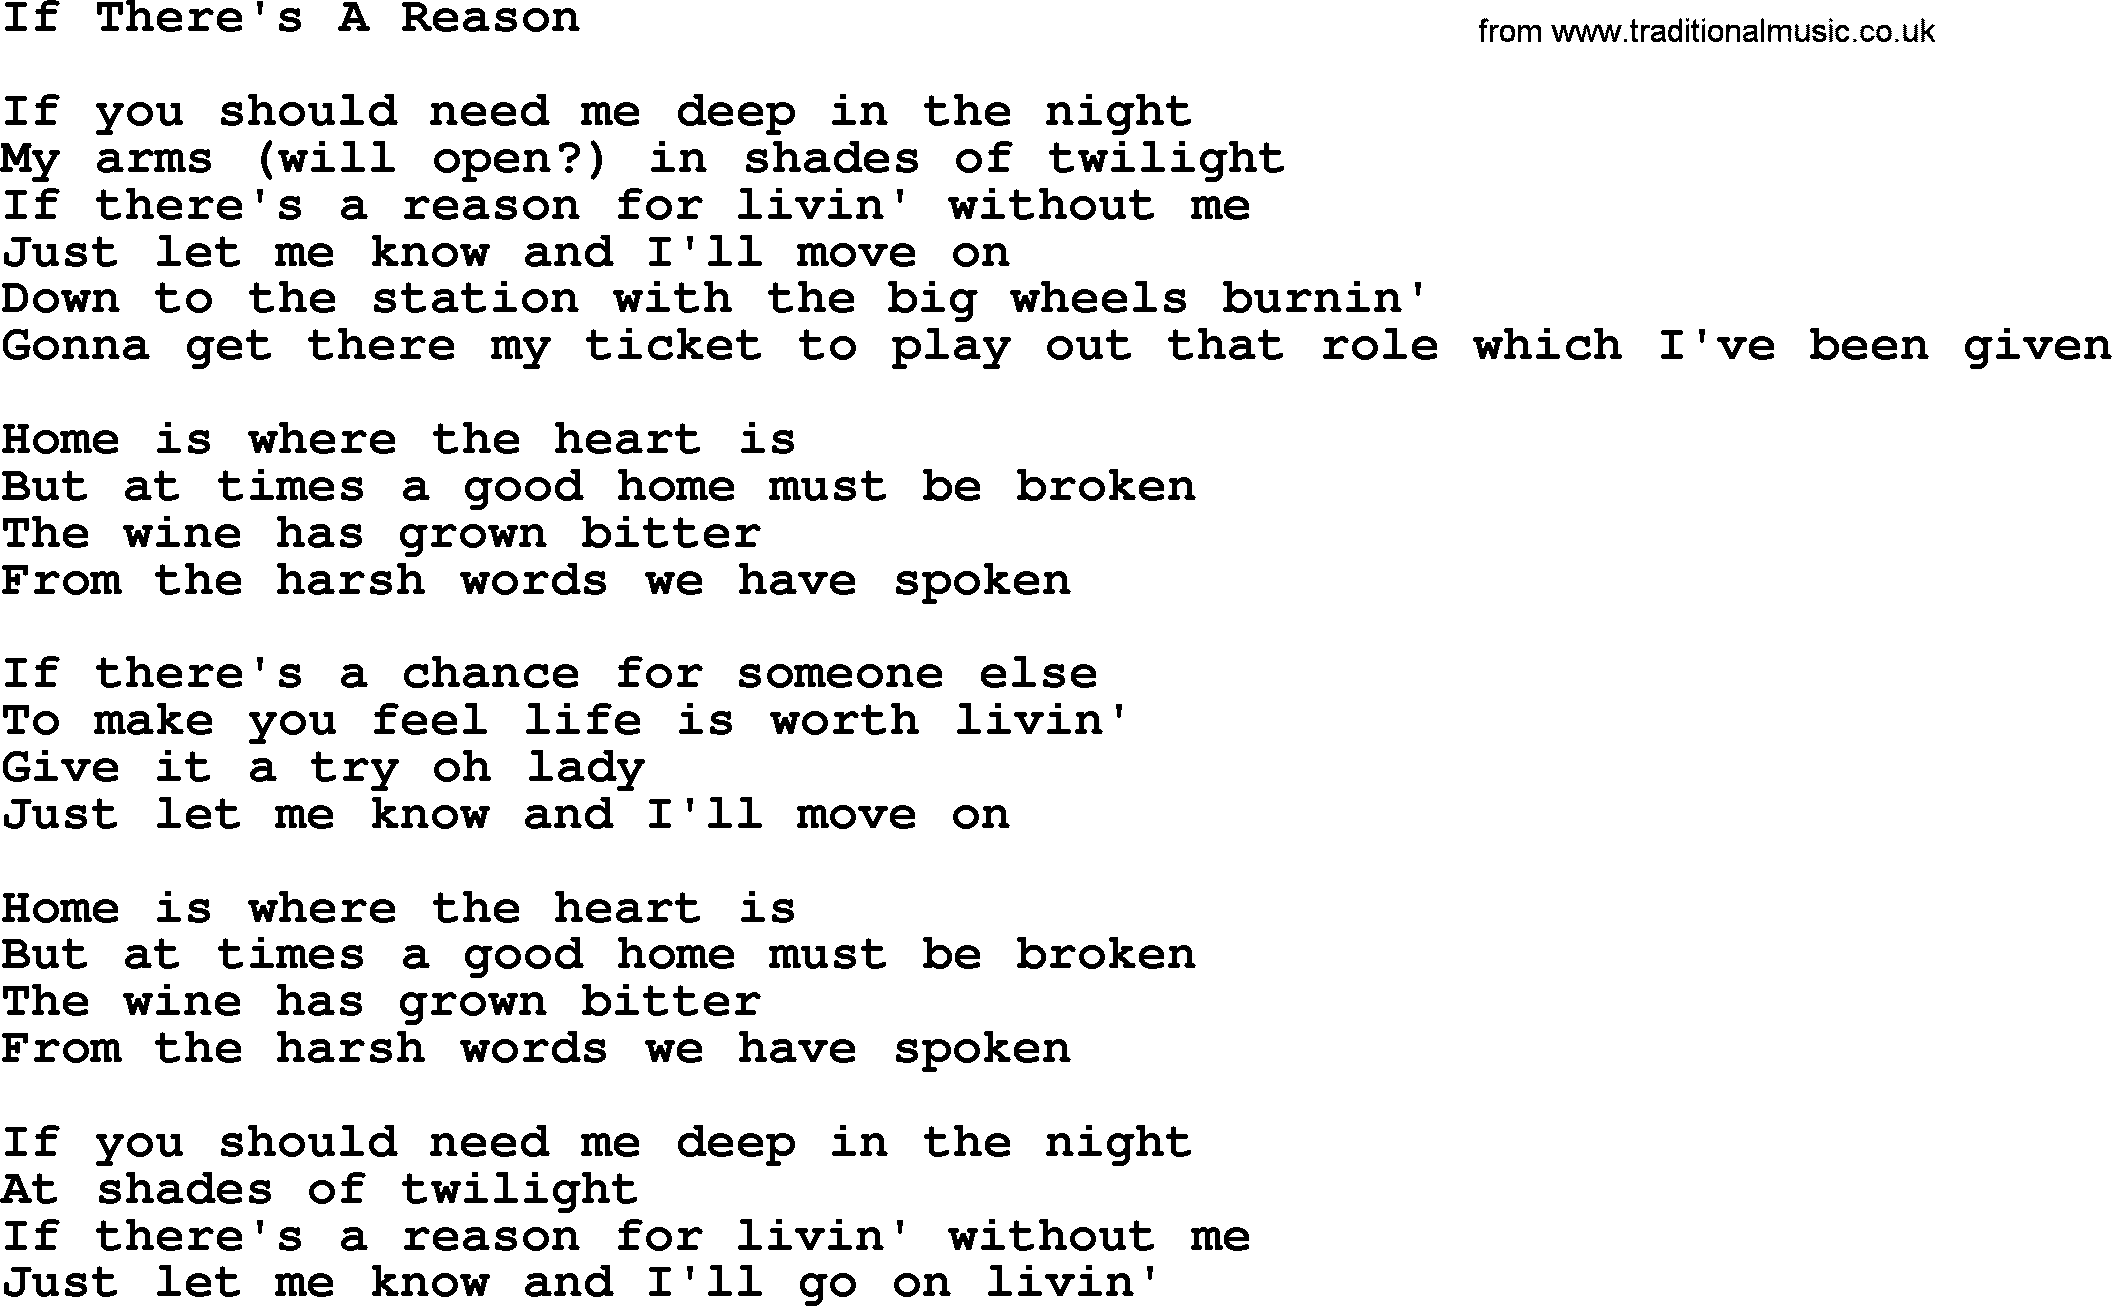 Gordon Lightfoot song If There's A Reason, lyrics